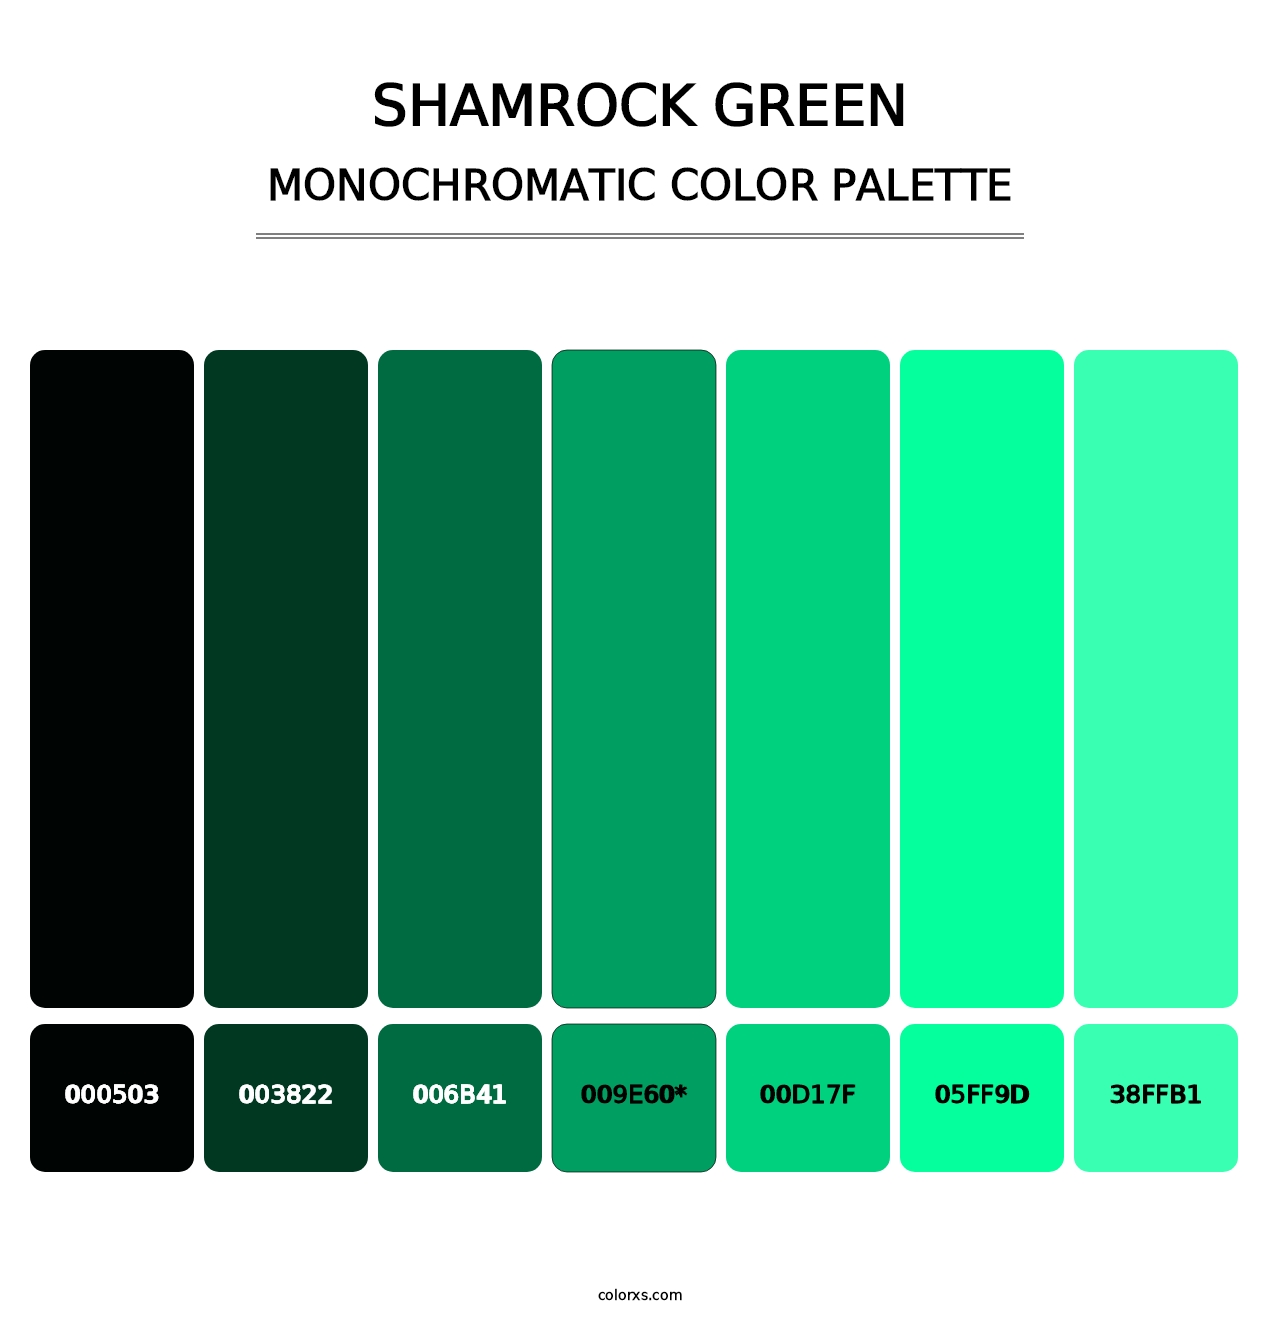 Shamrock Green - Monochromatic Color Palette